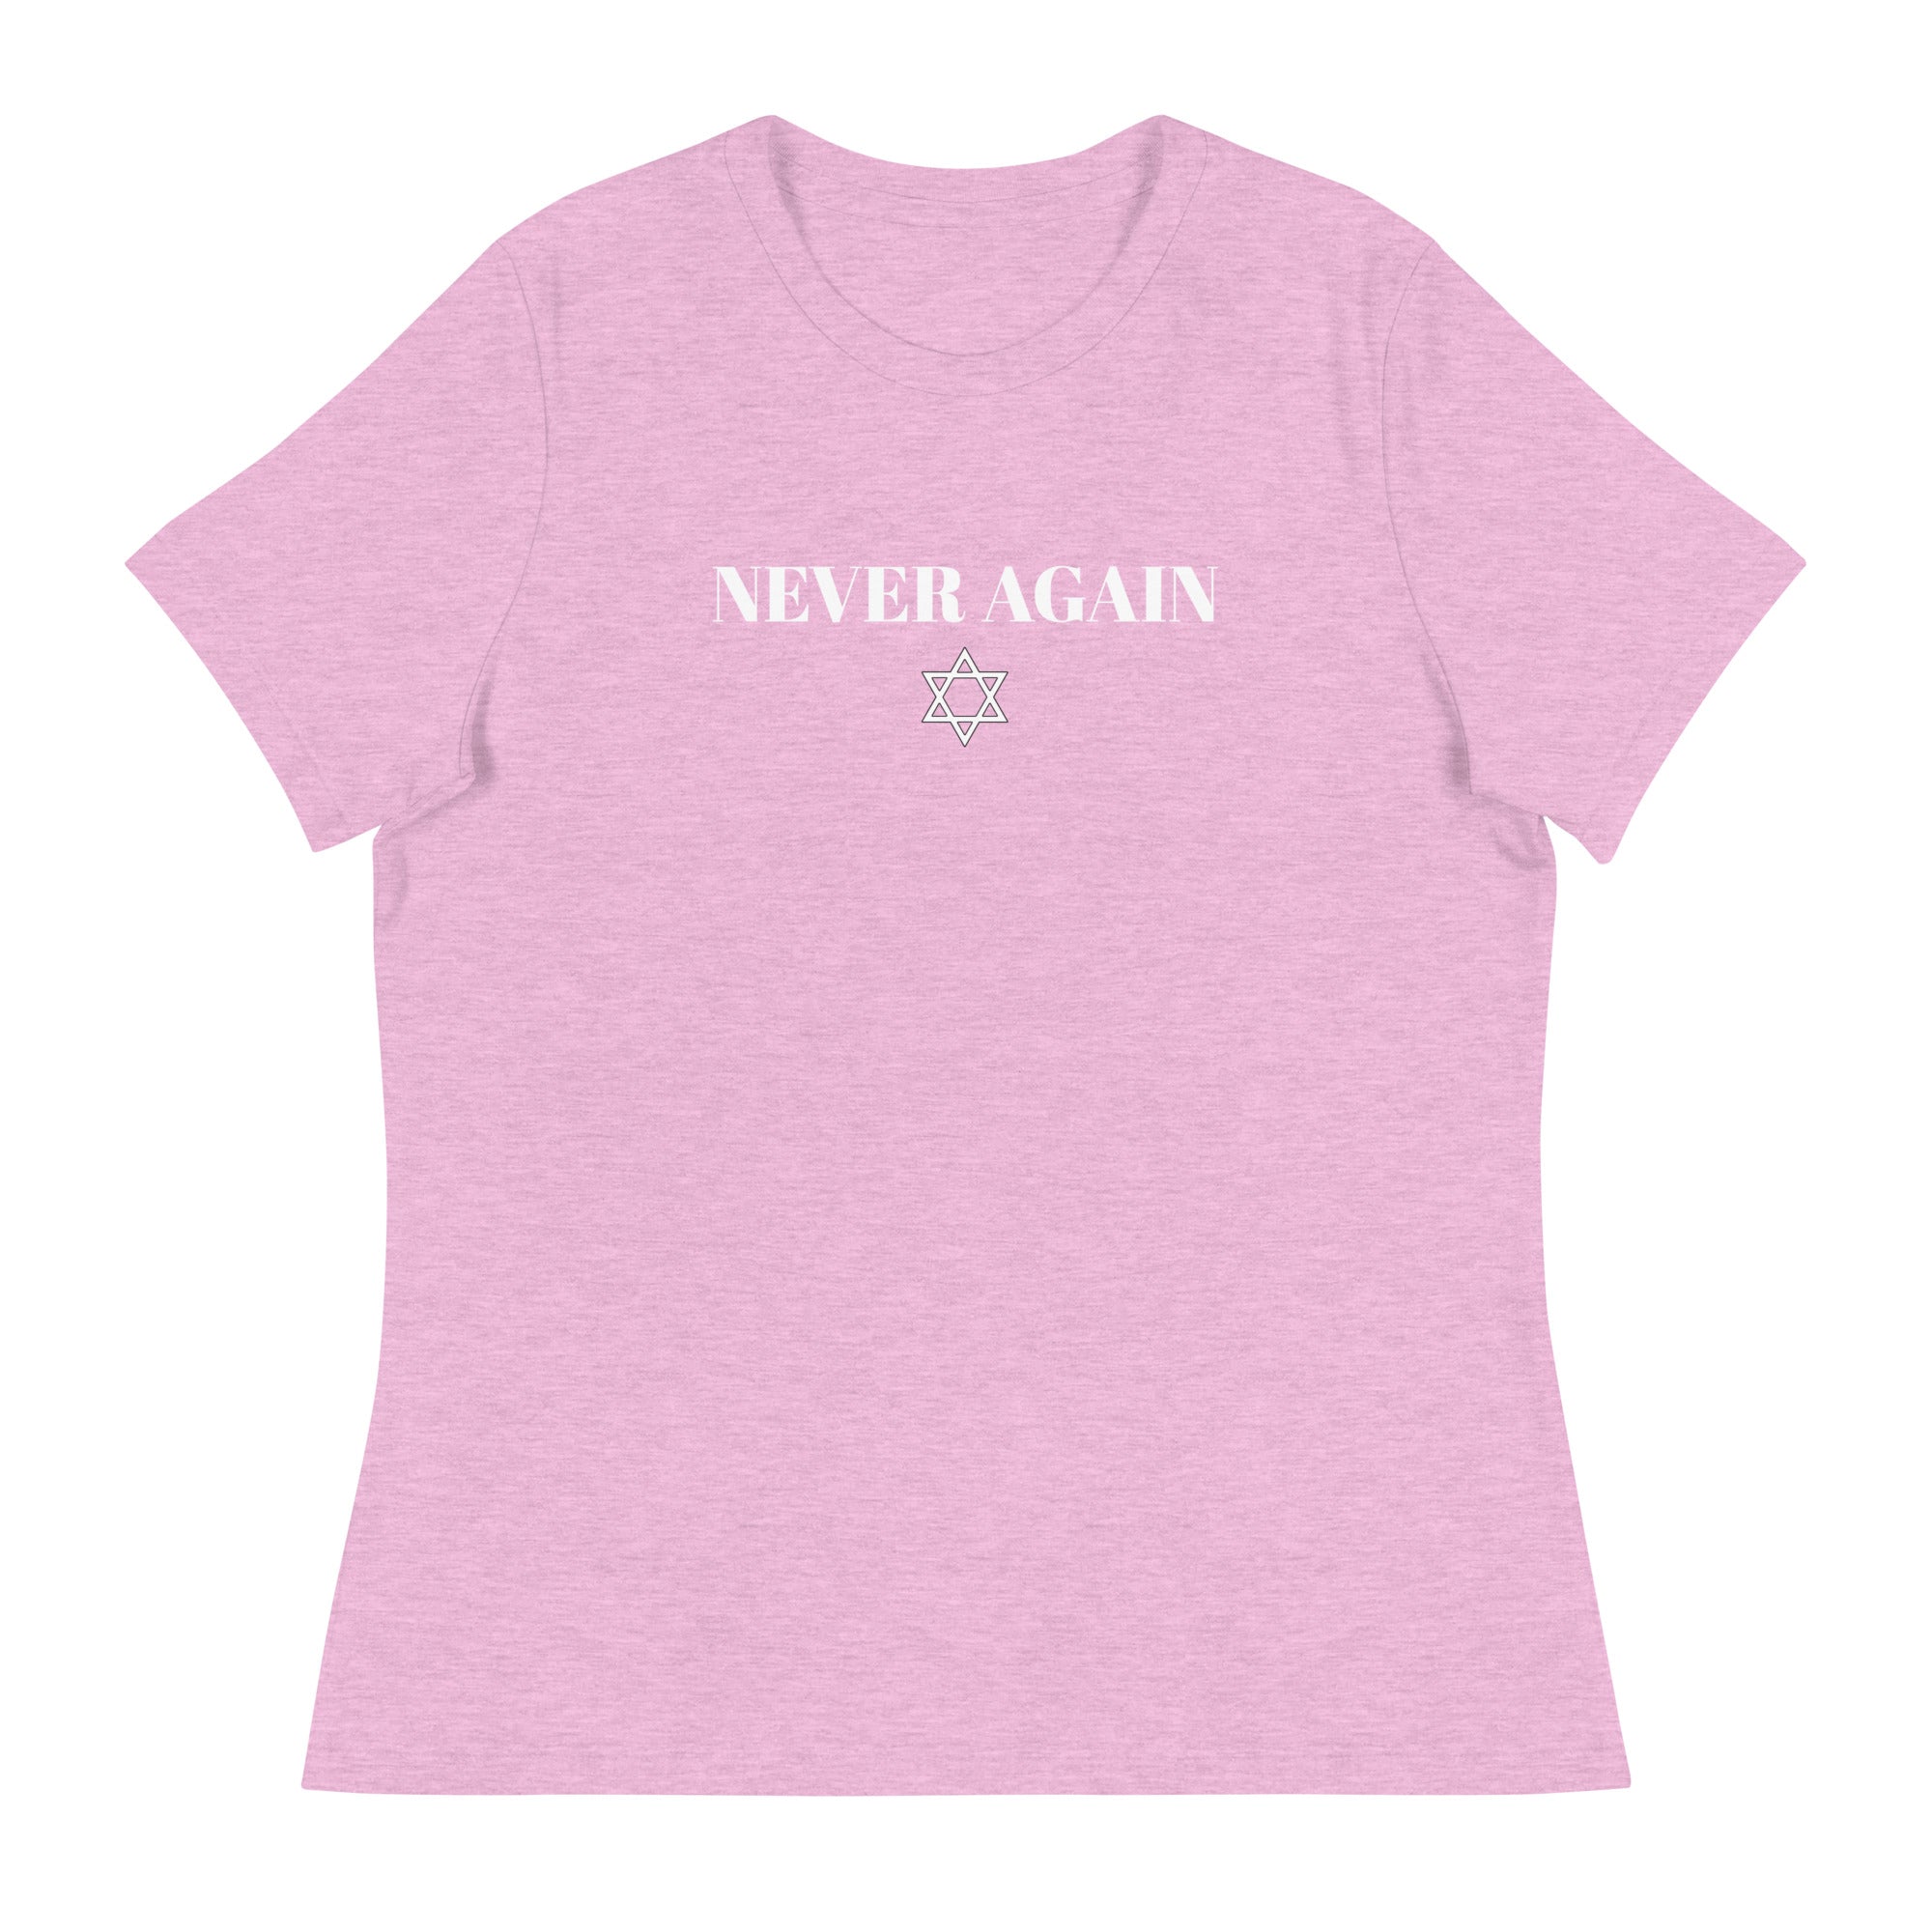 Never Again - Women's Relaxed T-Shirt